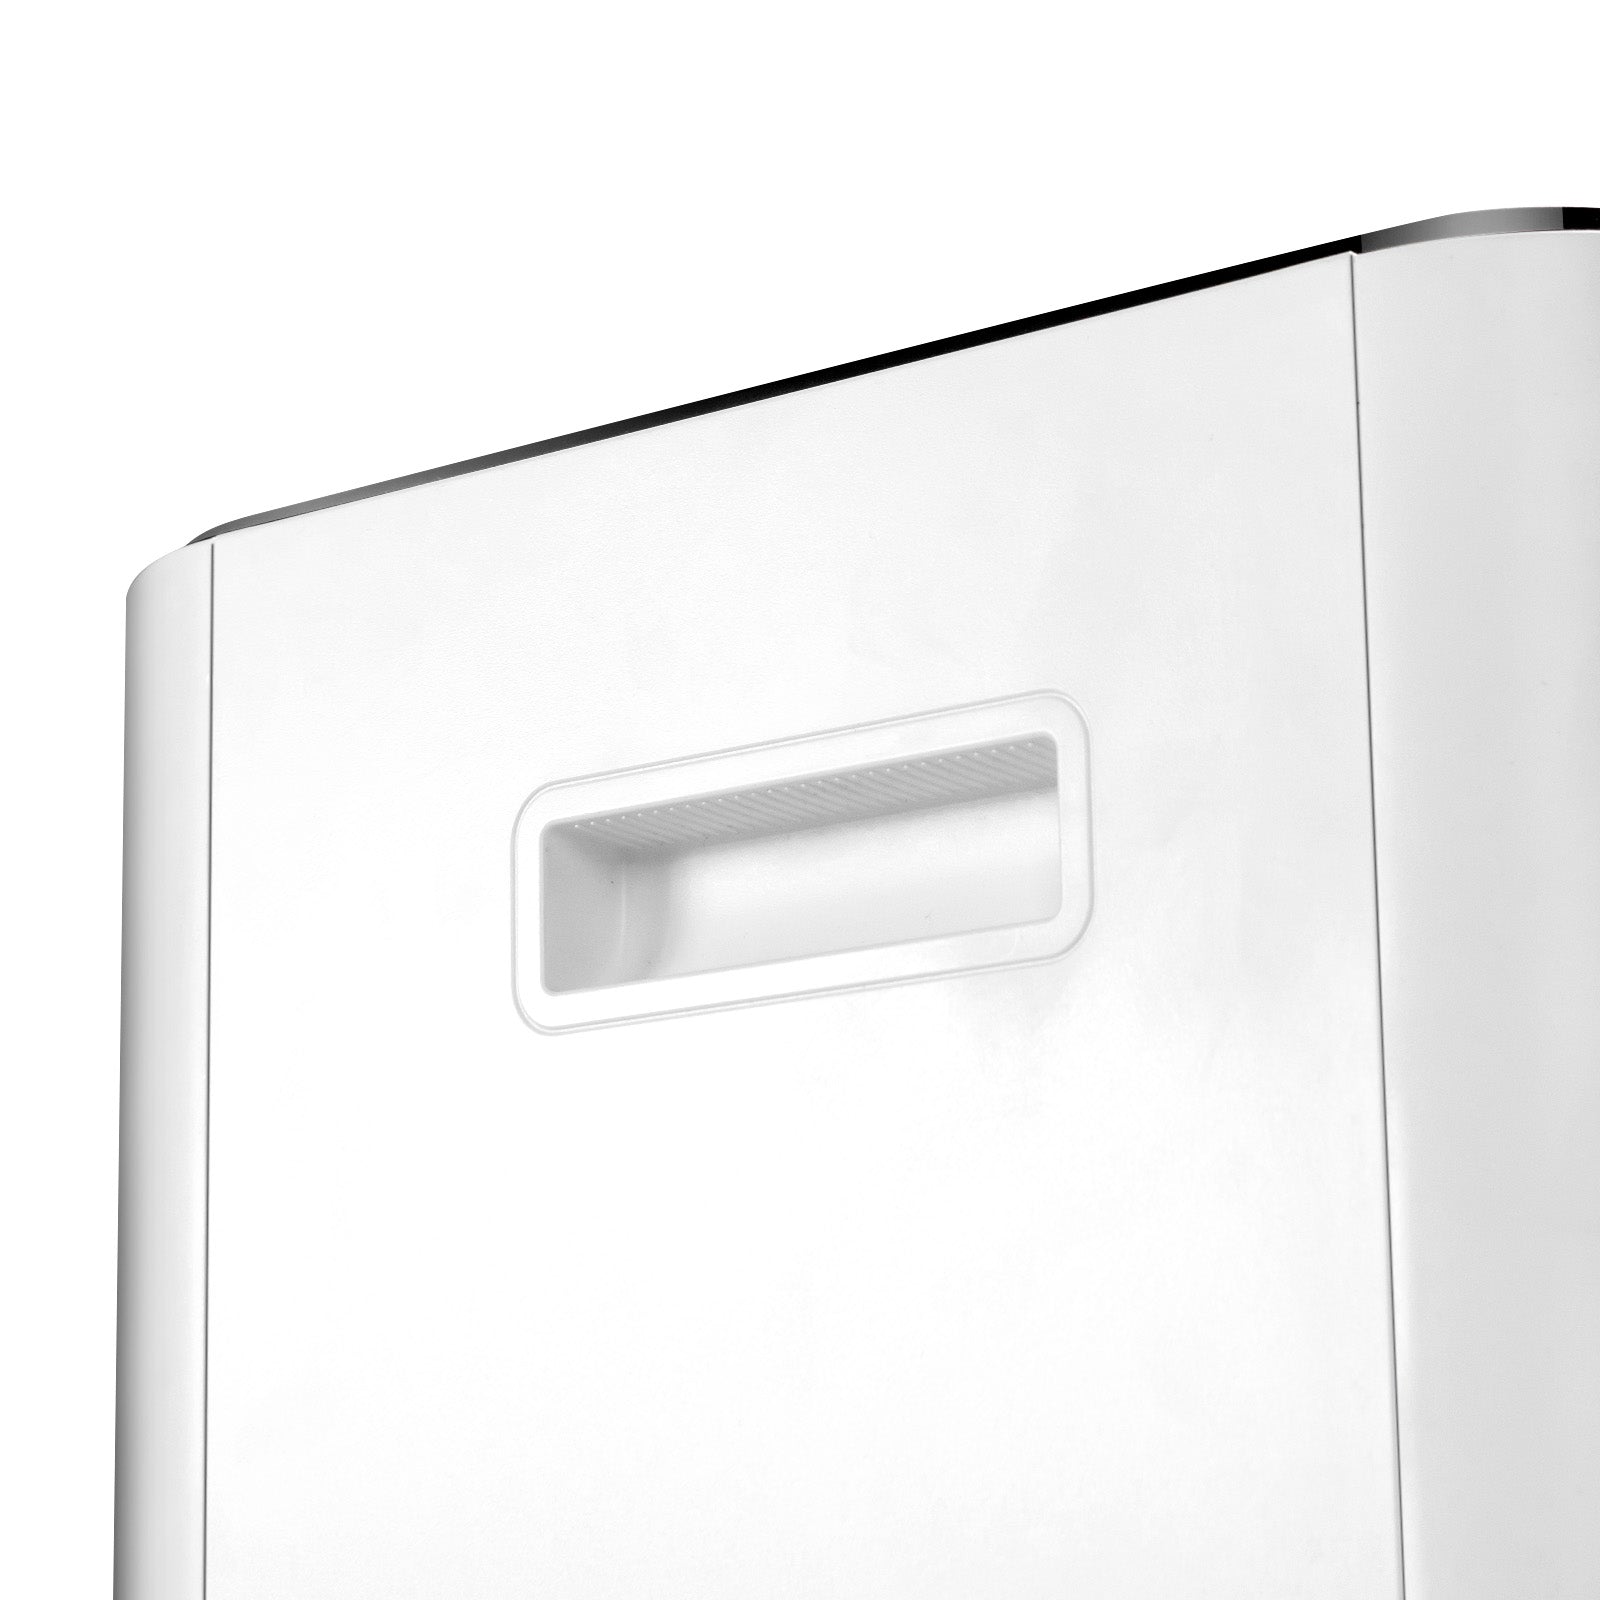 10000 BTU(Ashrae) Portable Air Conditioner with Fan Dehumidifier Sleep Mode at Gallery Canada